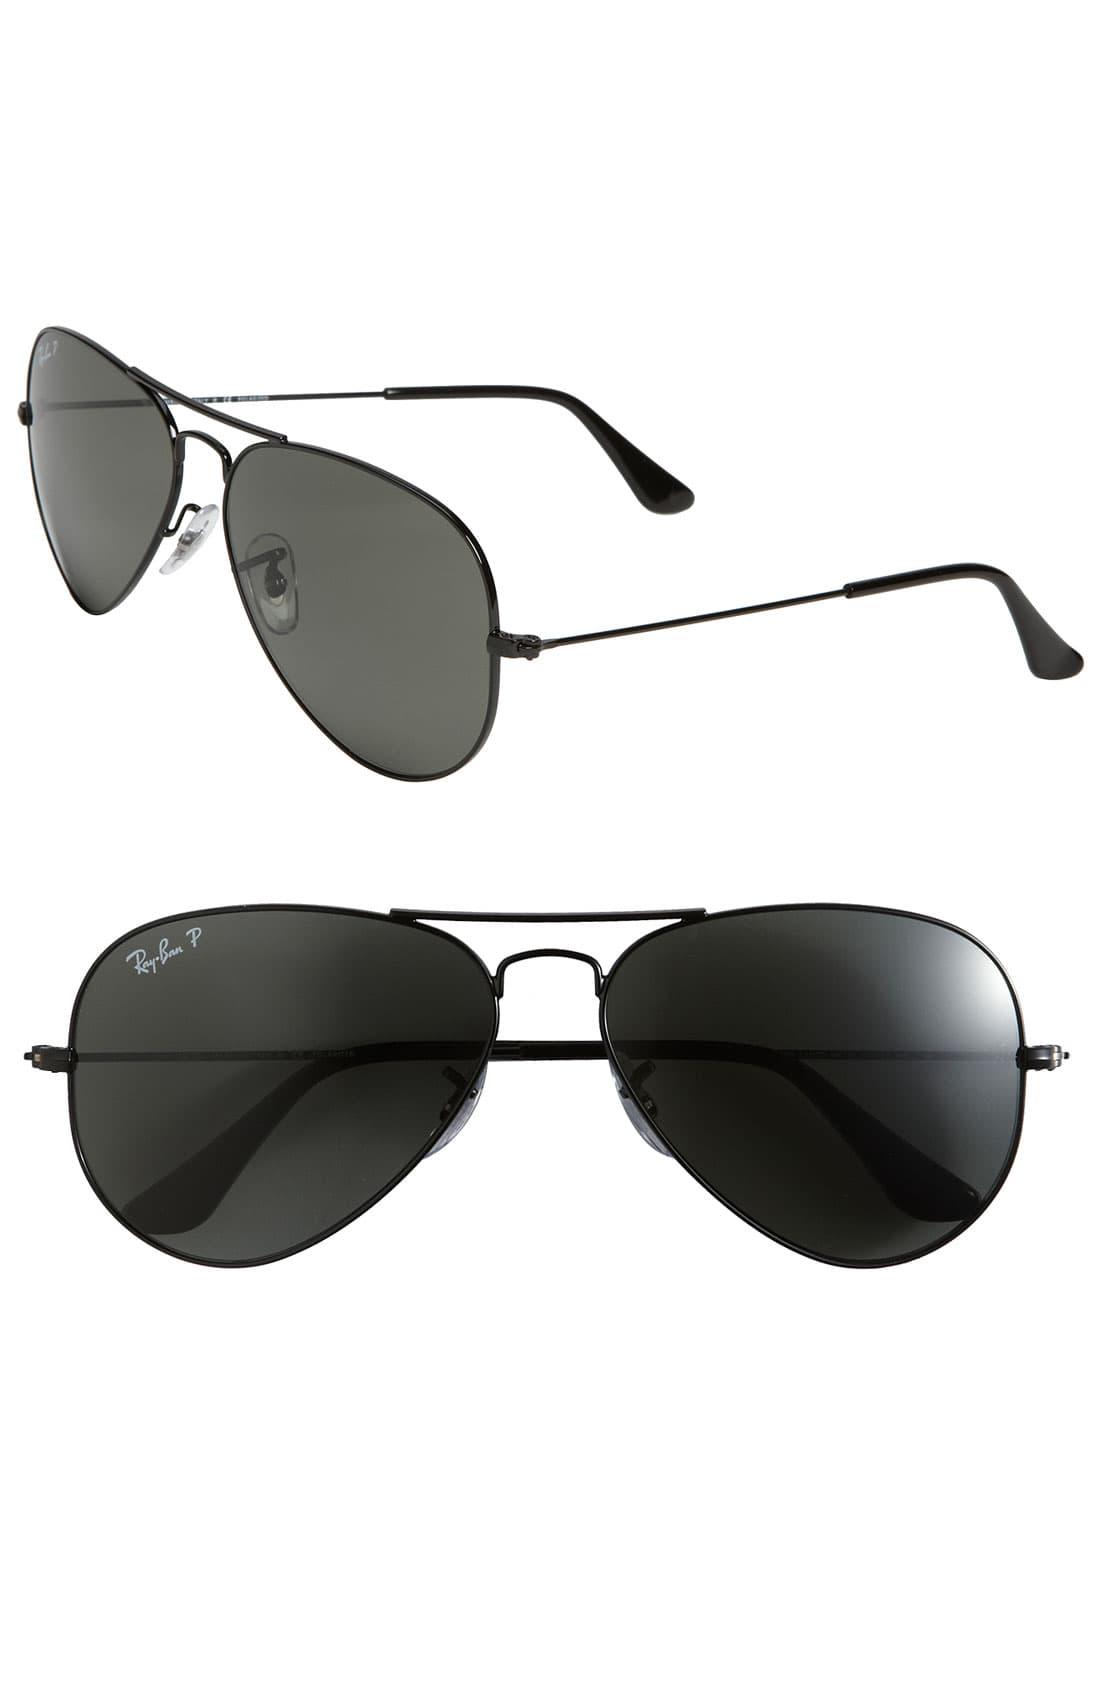 Ray Ban Polarized Original Aviator 58mm Sunglasses In Black Green P Black For Men Lyst